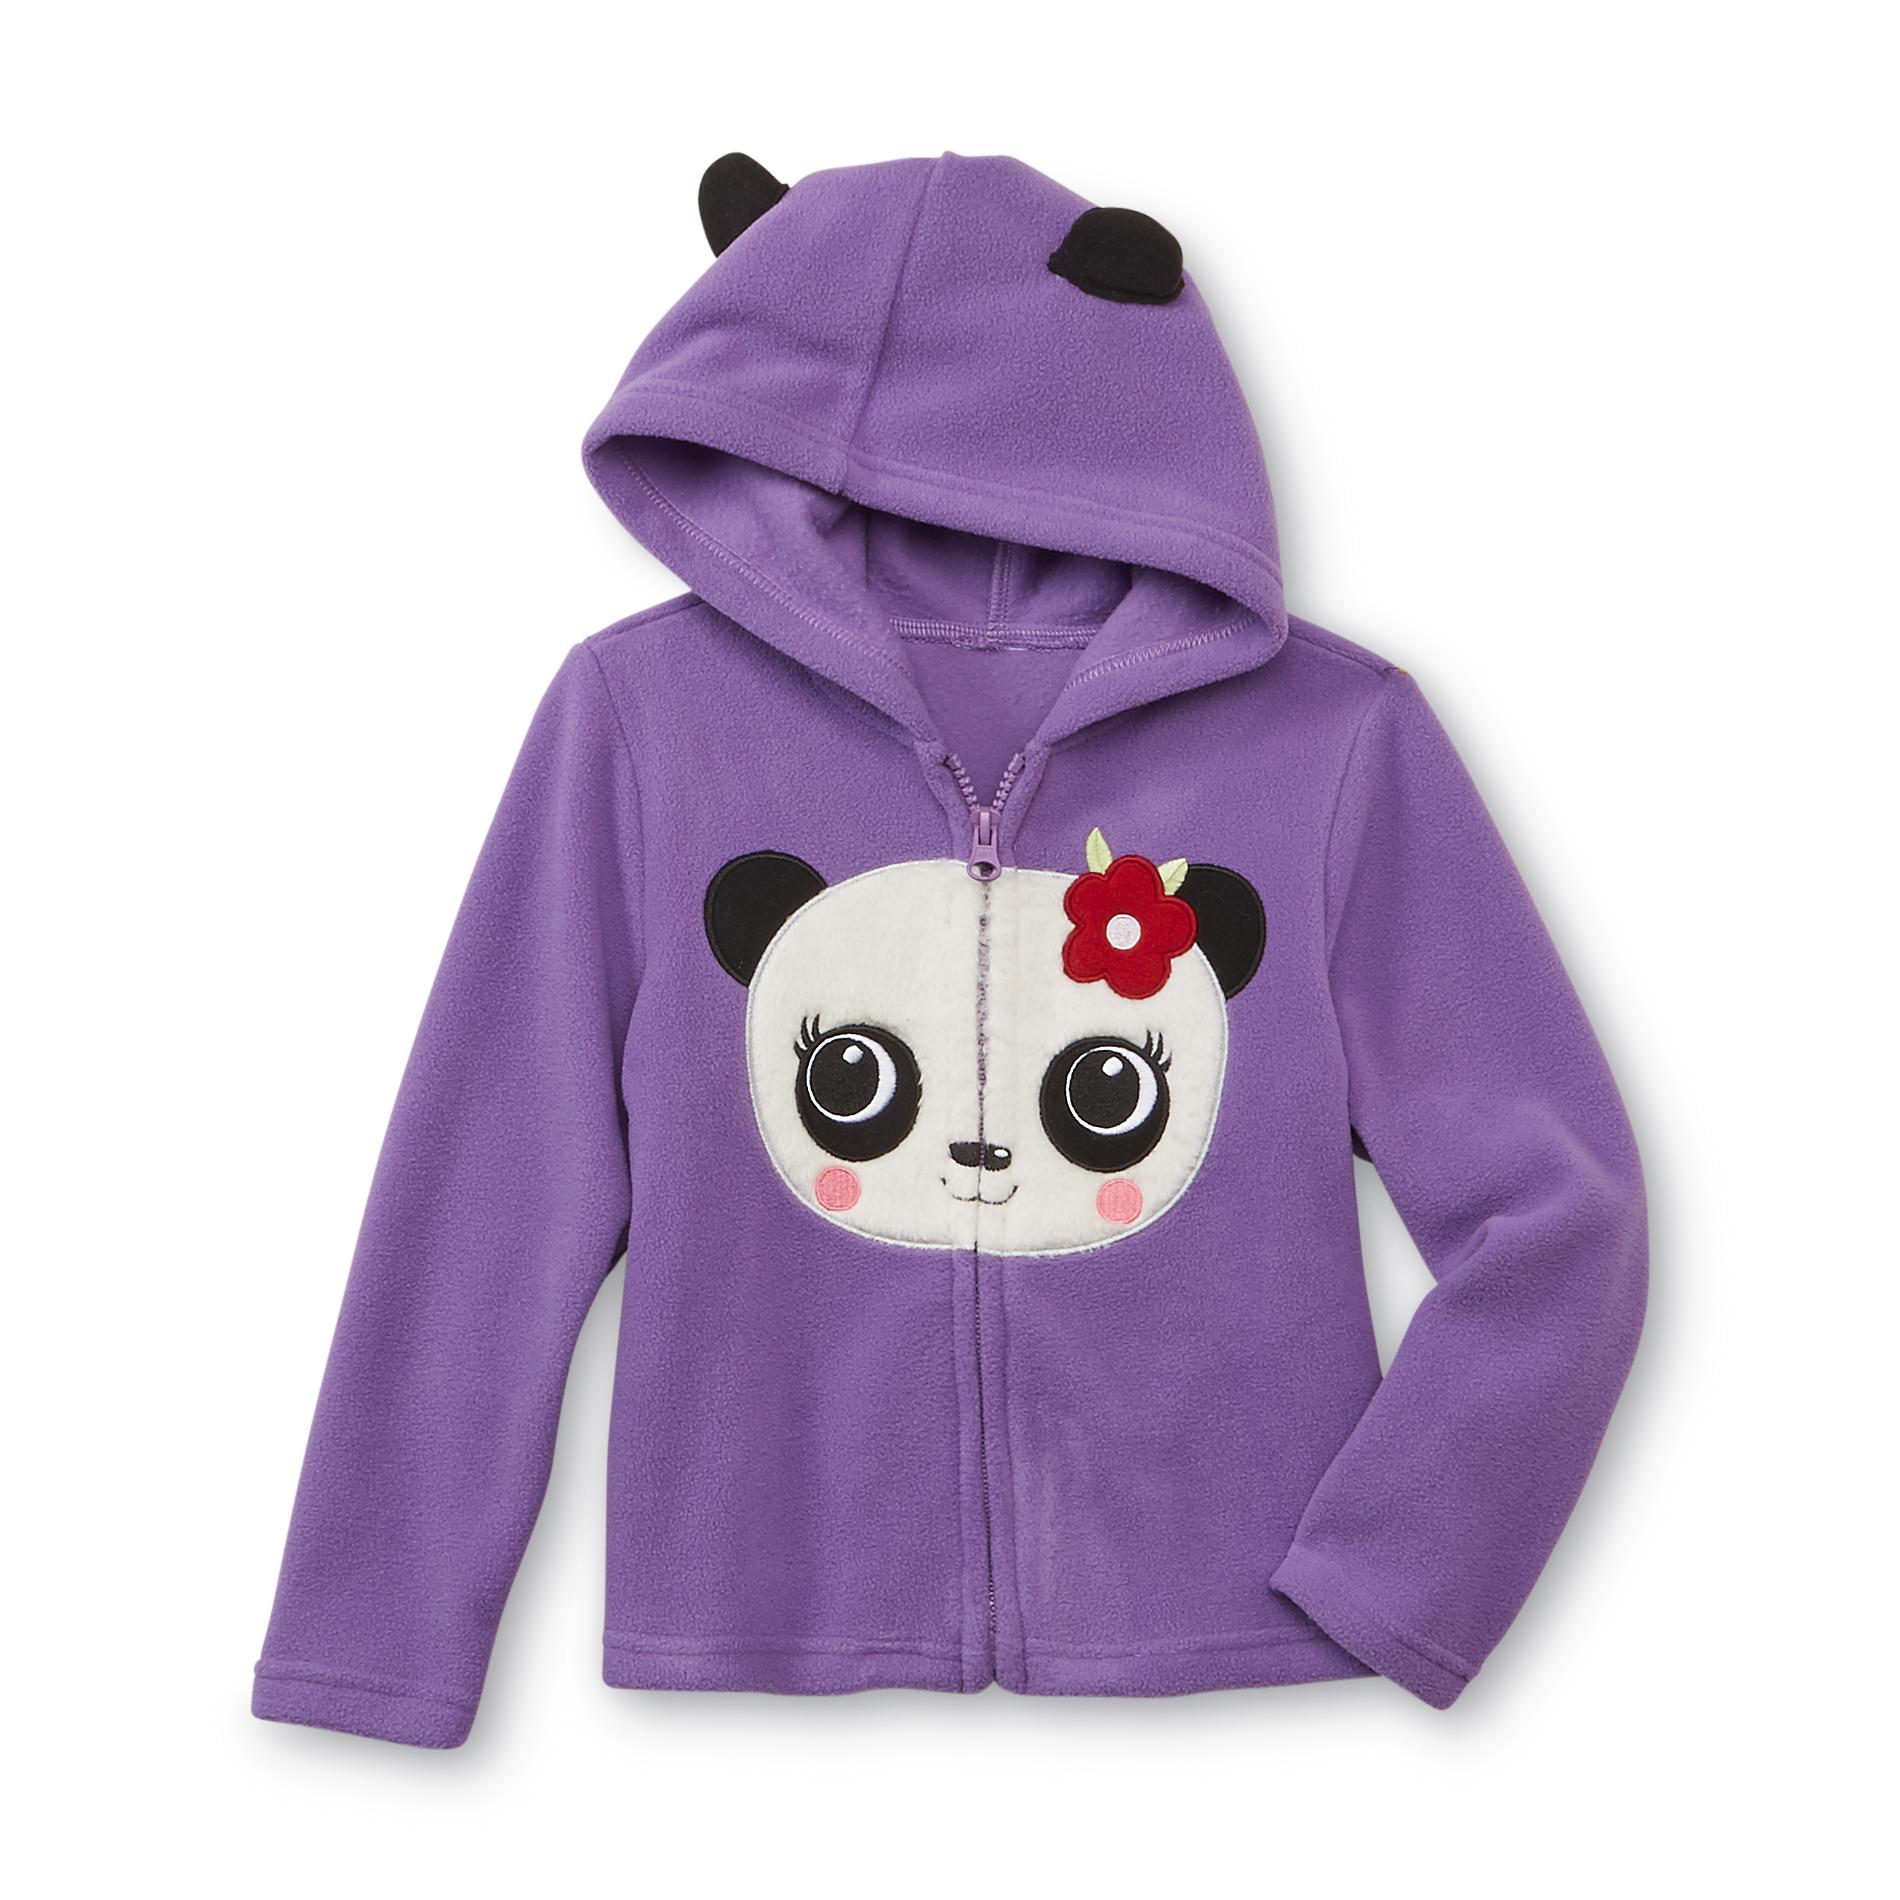 WonderKids Toddler Girl's Fleece Hoodie Jacket - Panda